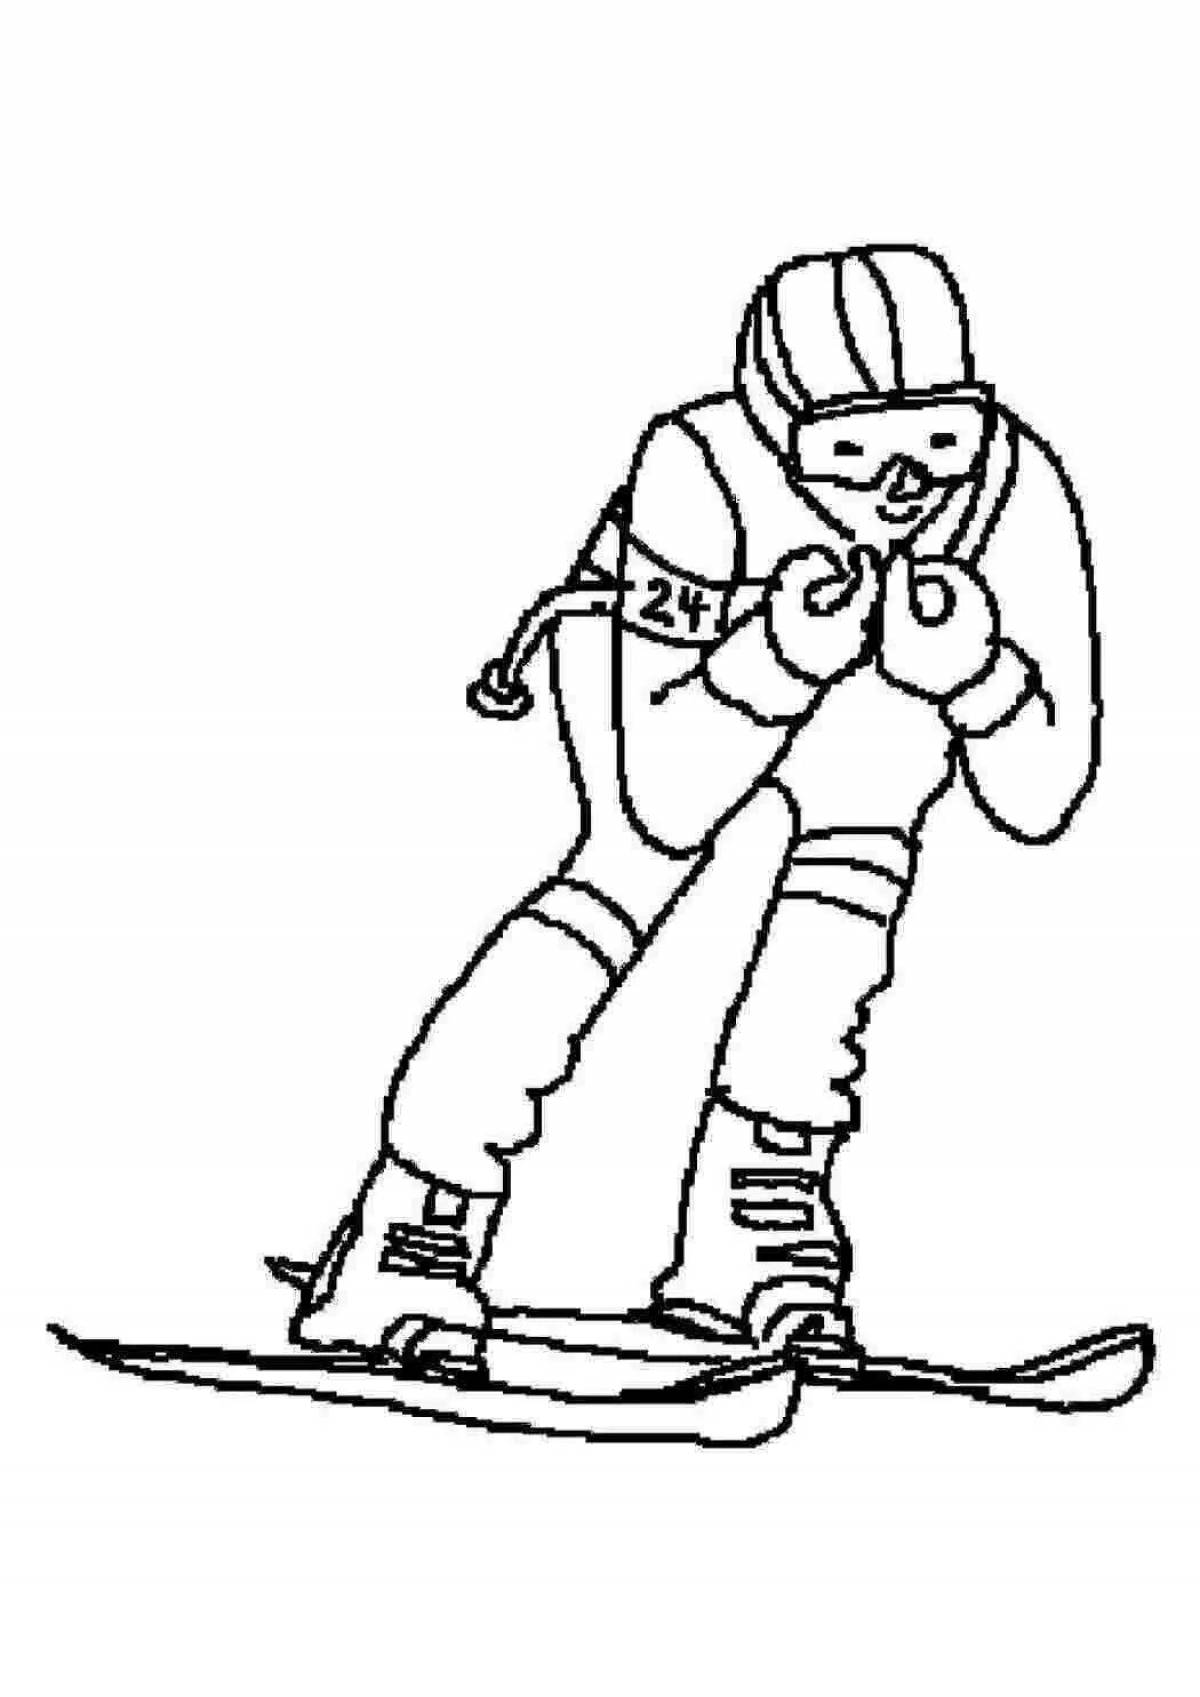 Coloring book brave kid skier